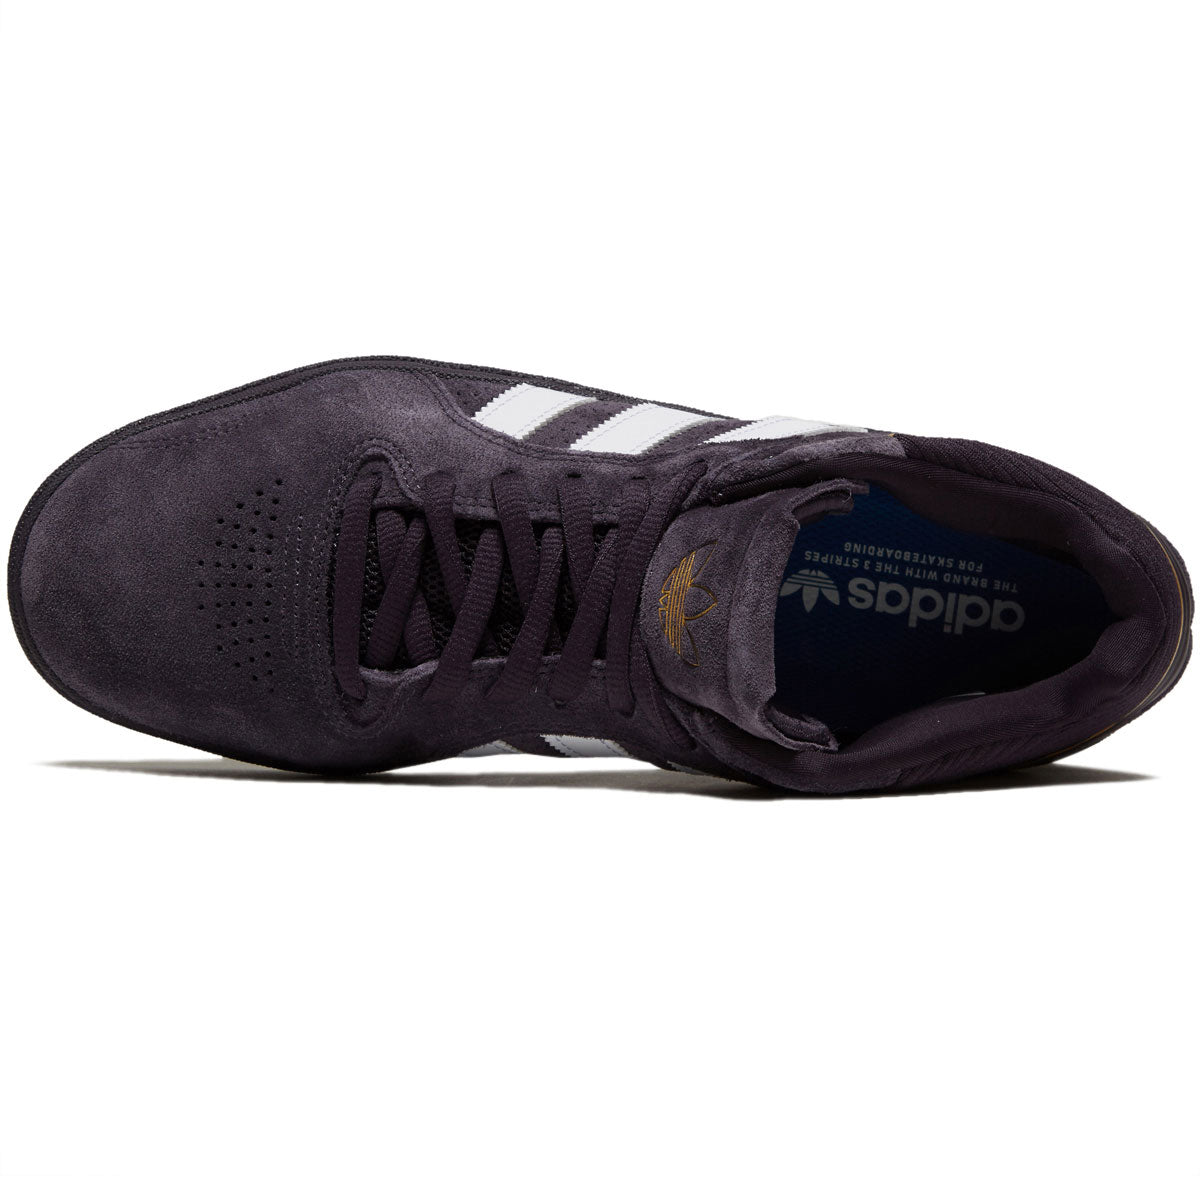 Adidas Tyshawn Shoes - Aurora Black/White/Bluebird image 3